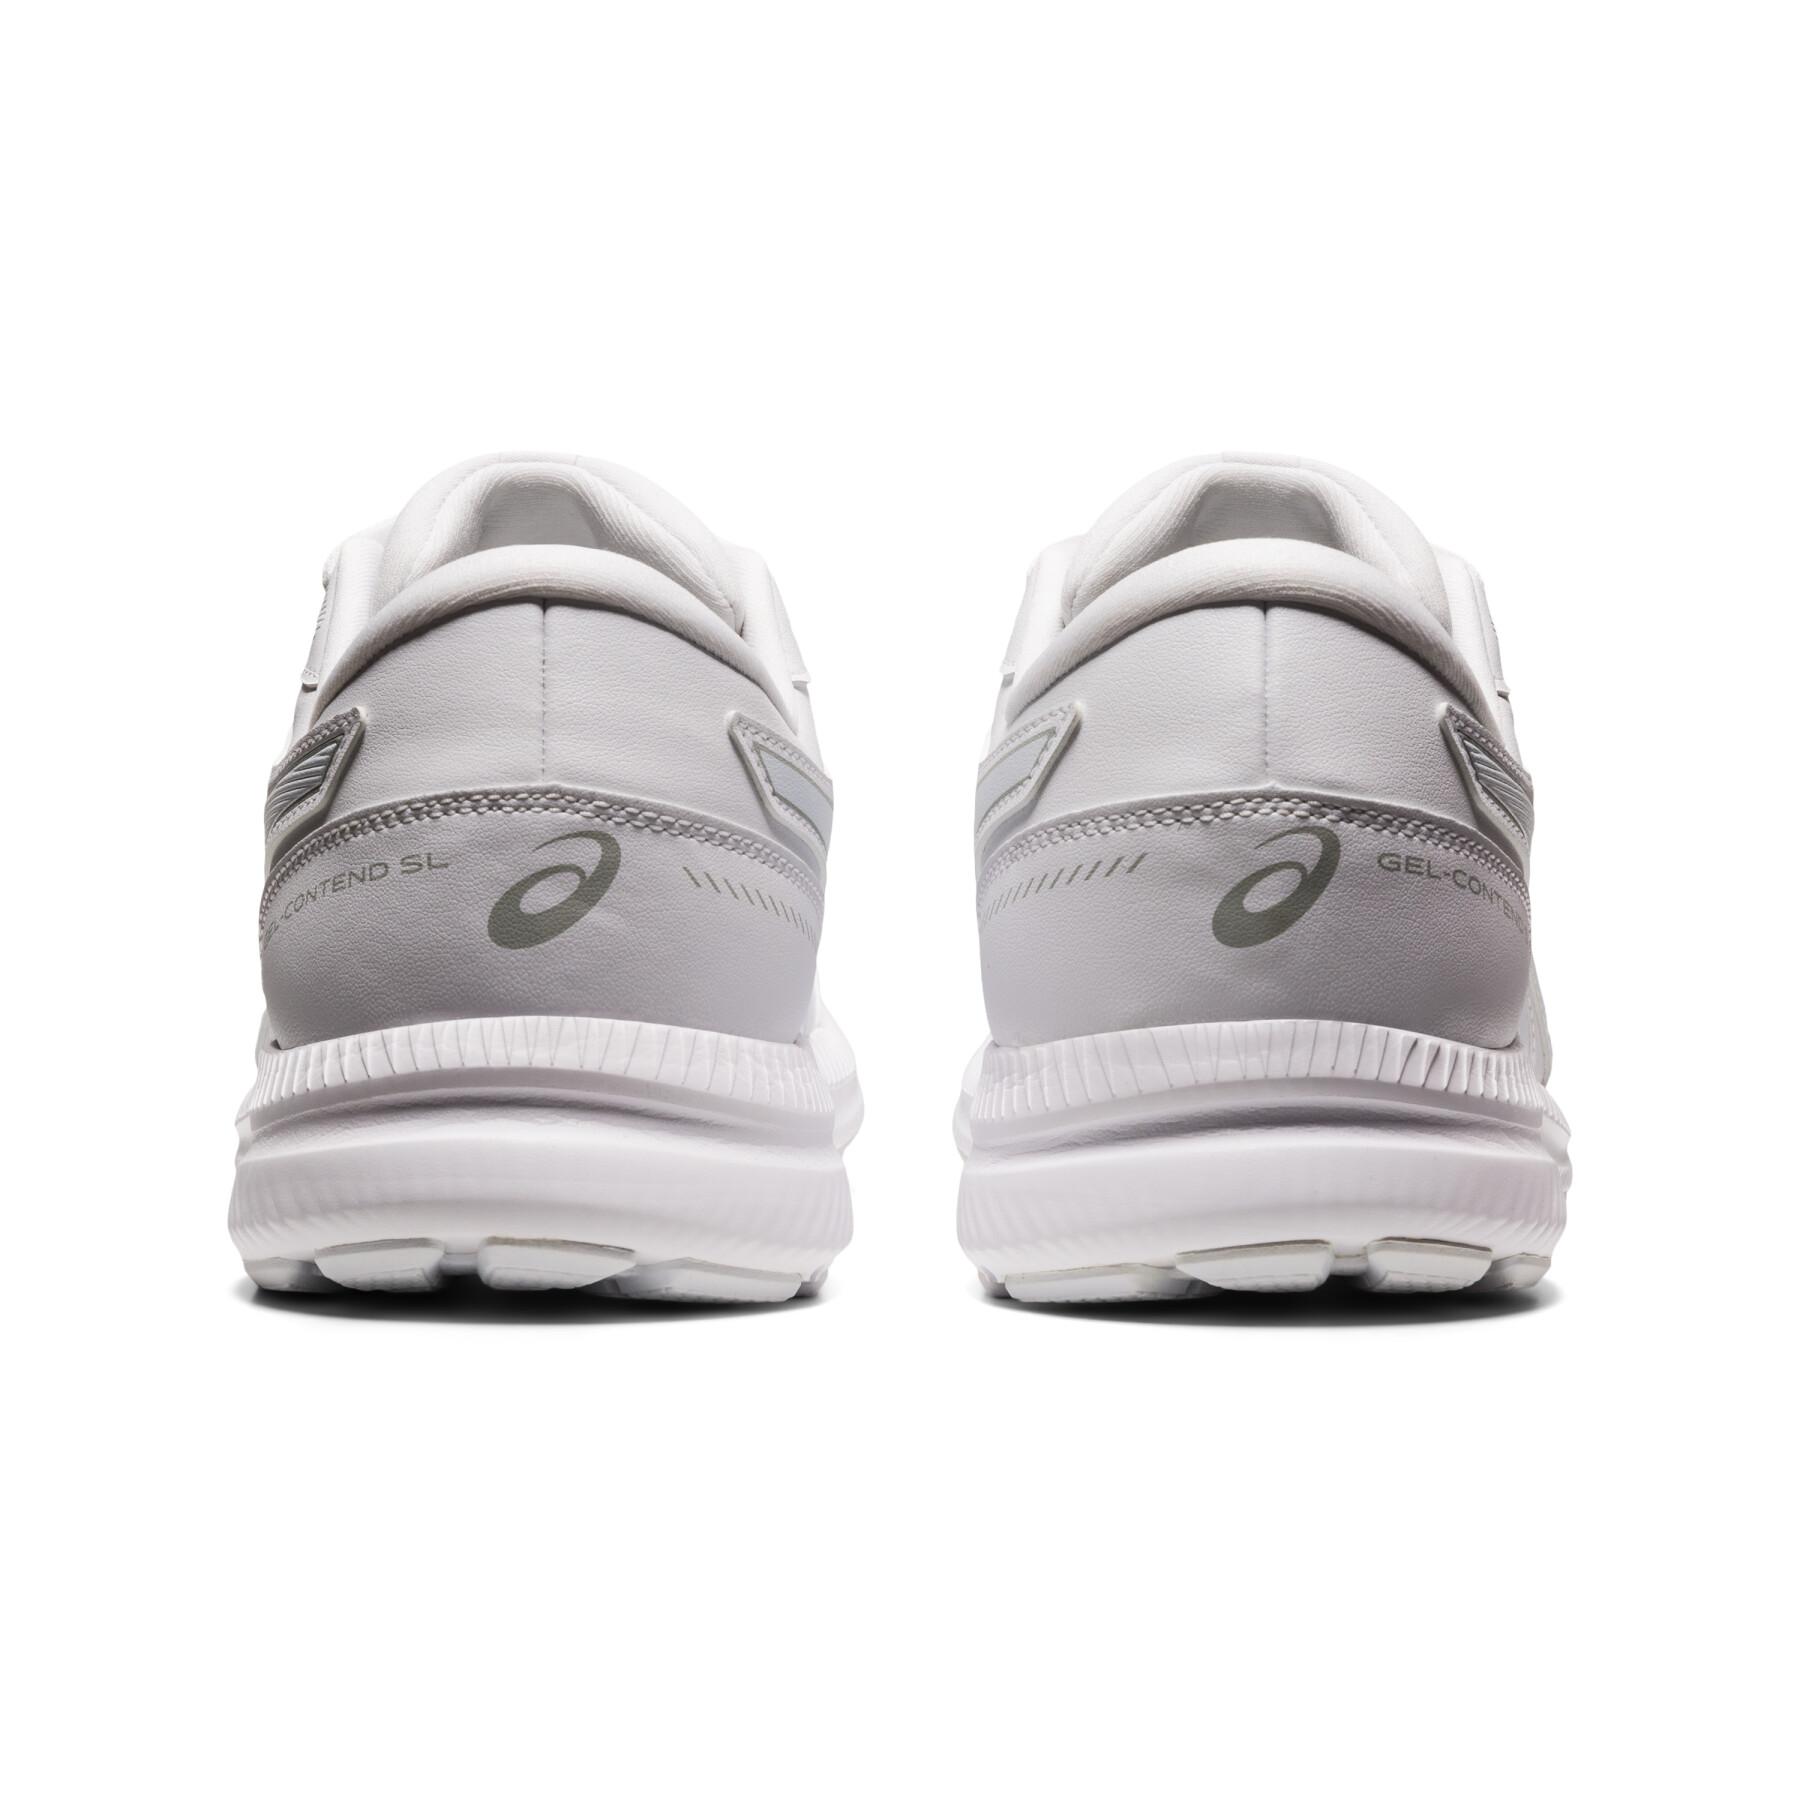 Running shoes Asics Gel-contend SL